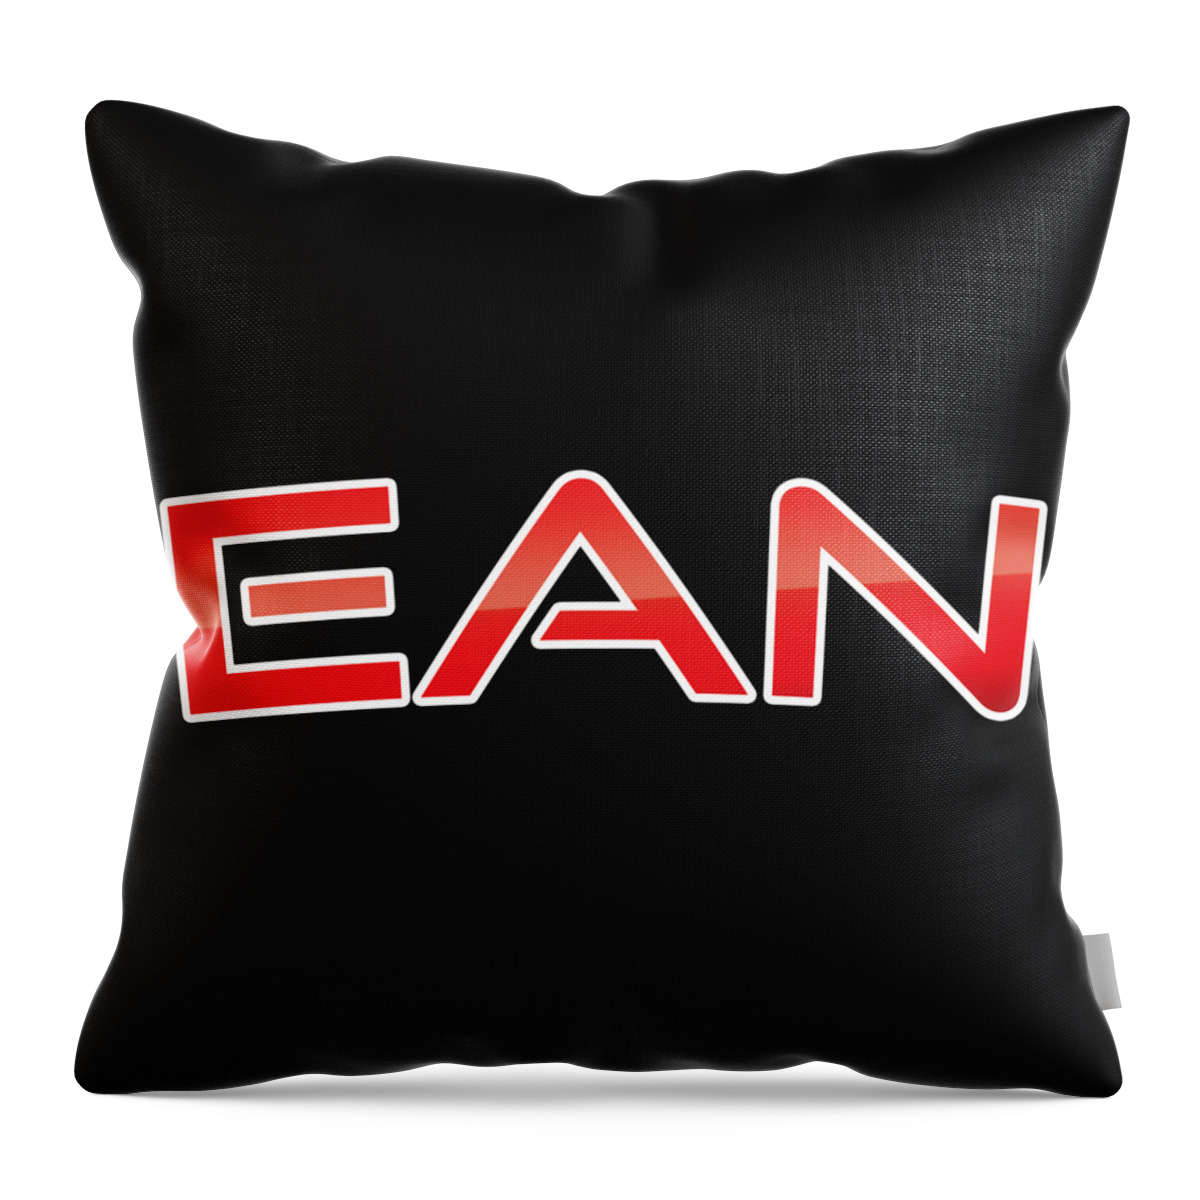 Ean Throw Pillow featuring the digital art Ean by TintoDesigns